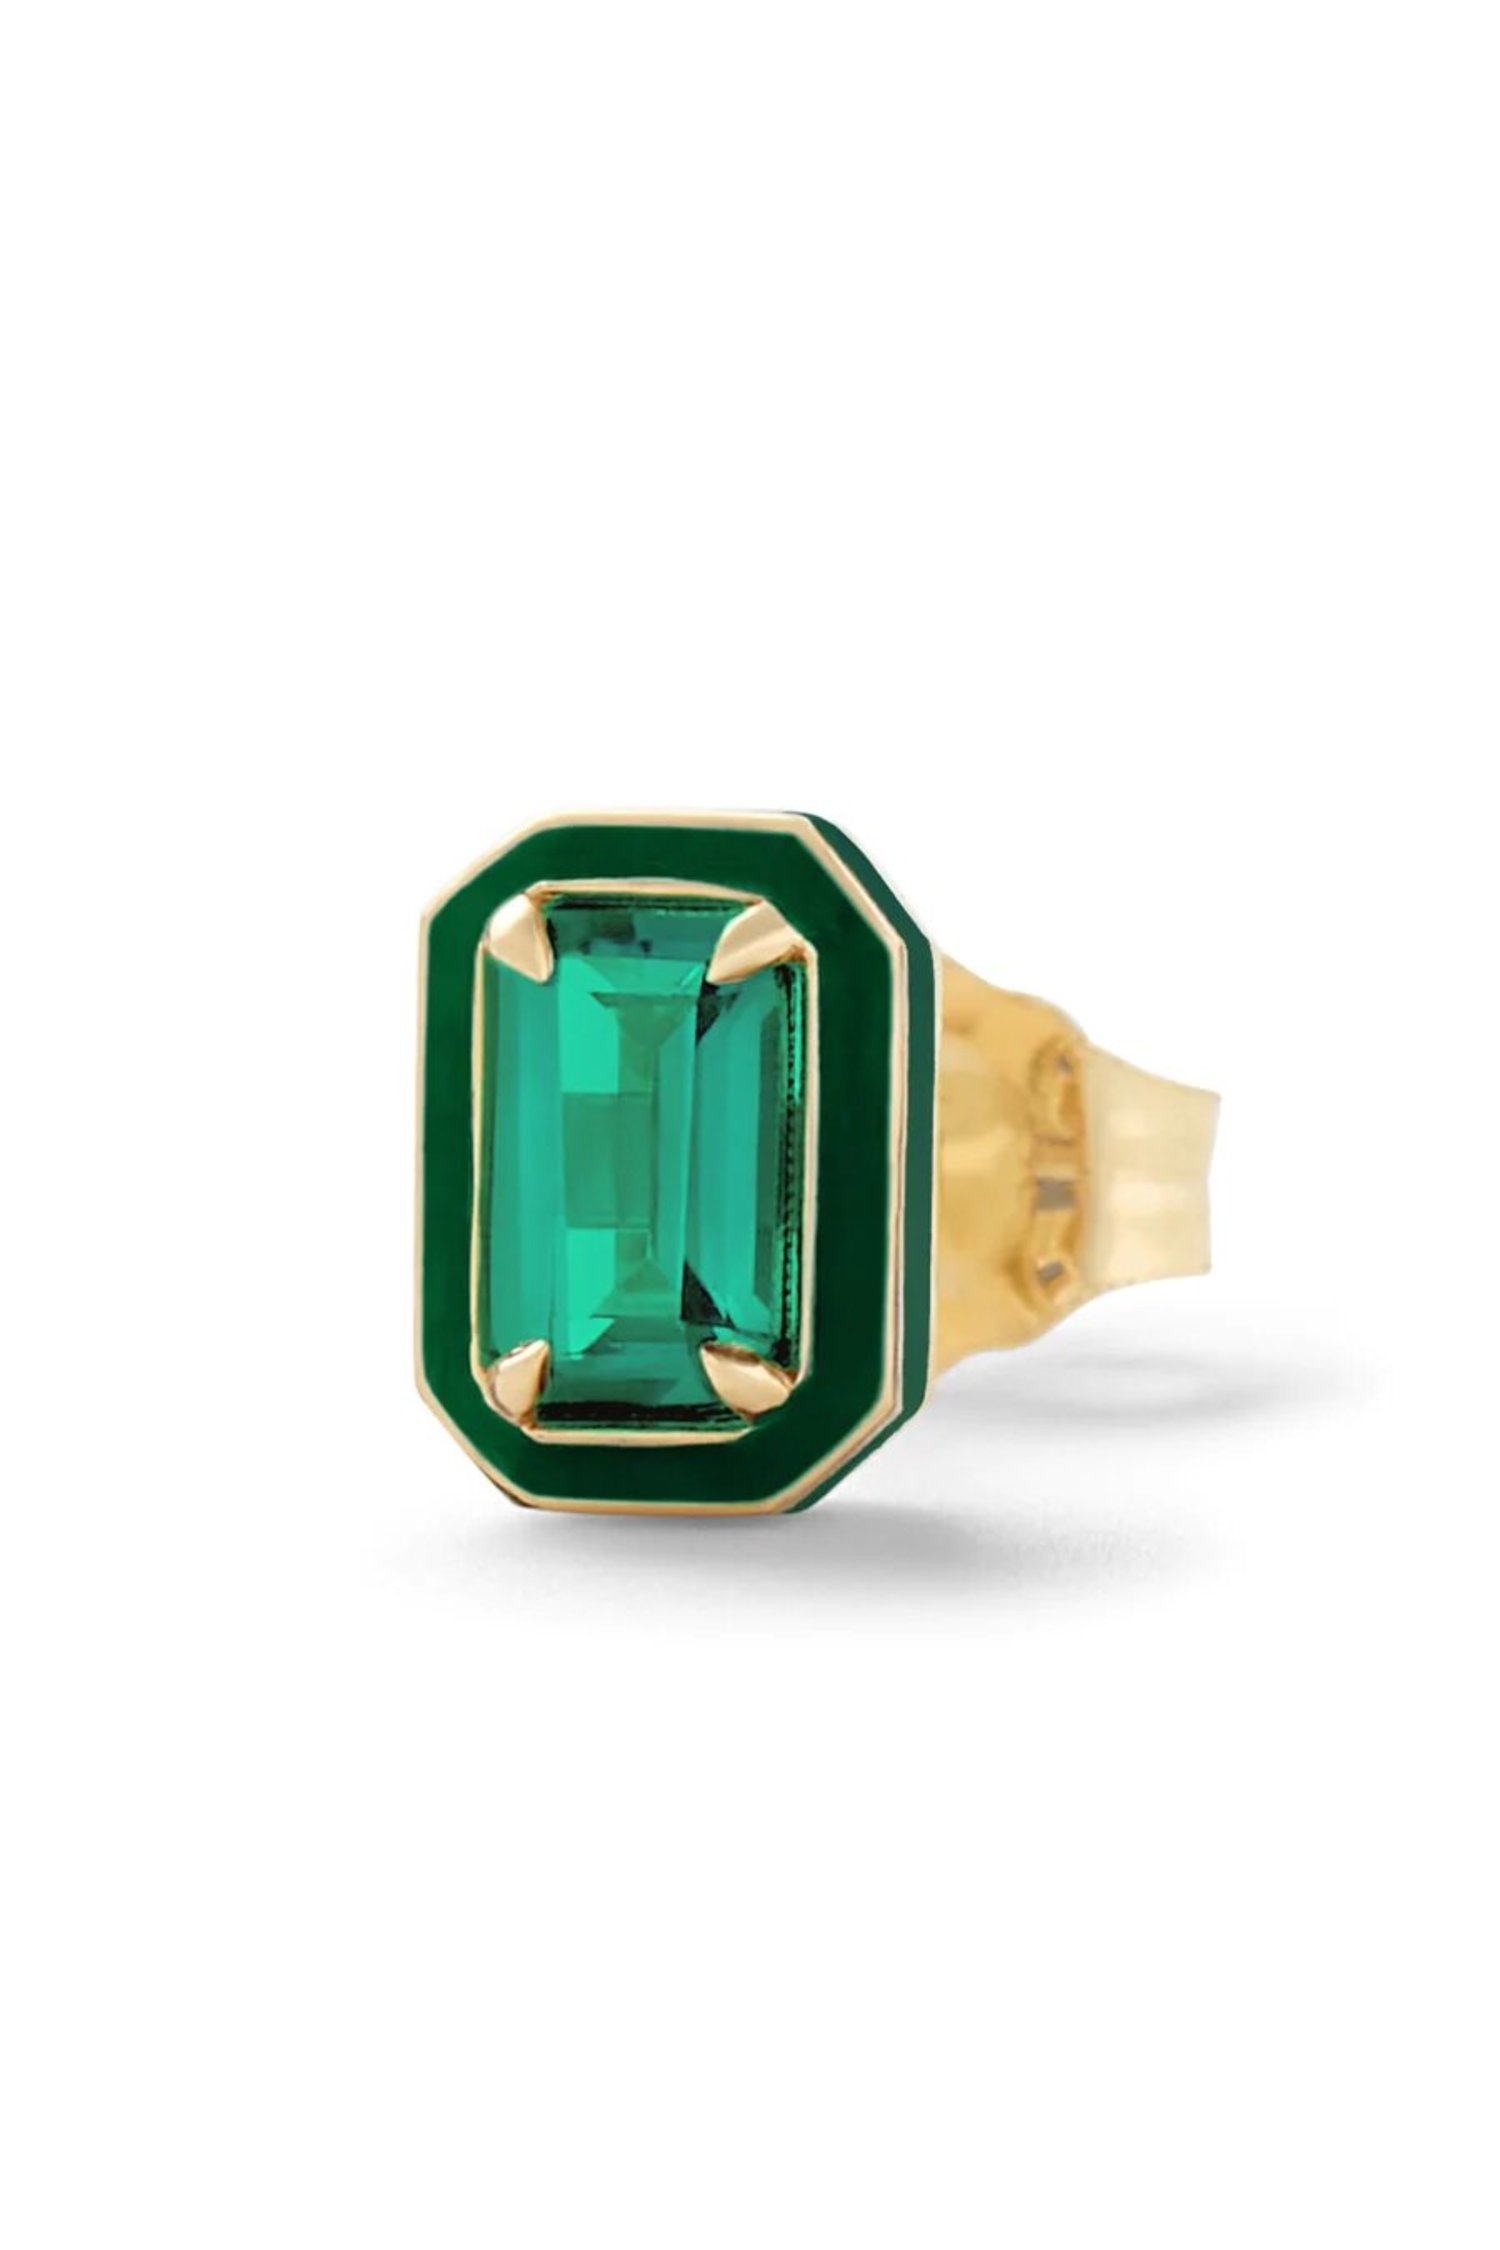 (Single) Mini Rectangular Emerald Cocktail Stud in 14K Yellow Gold